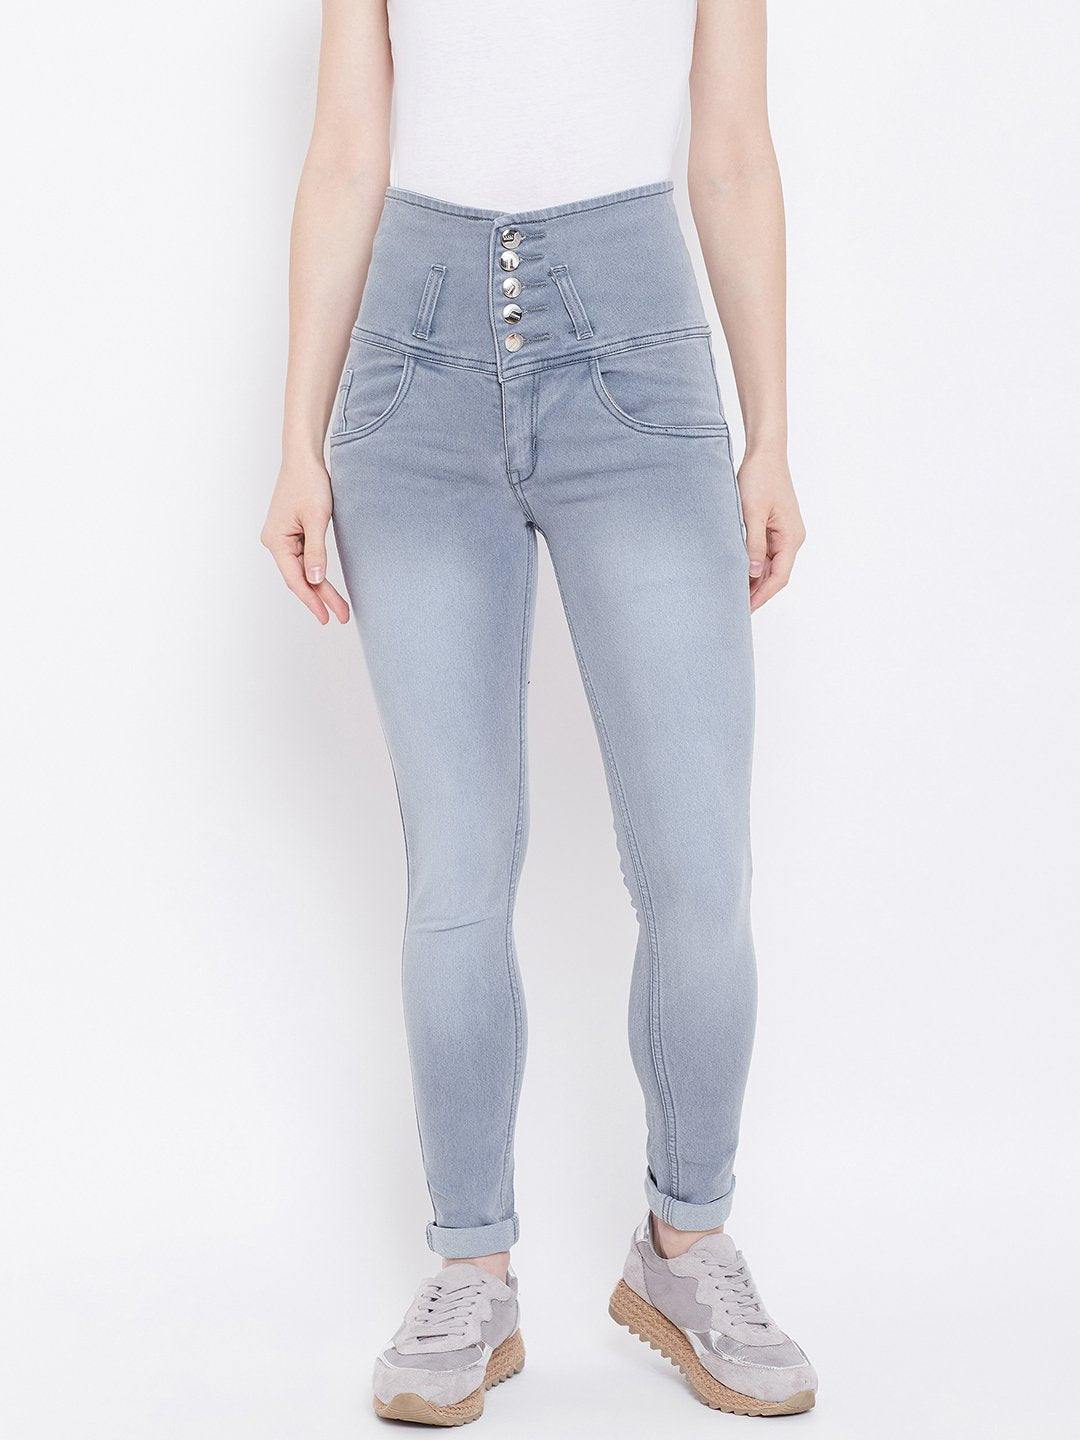 High Waist 5 button Grey Jeans - NiftyJeans